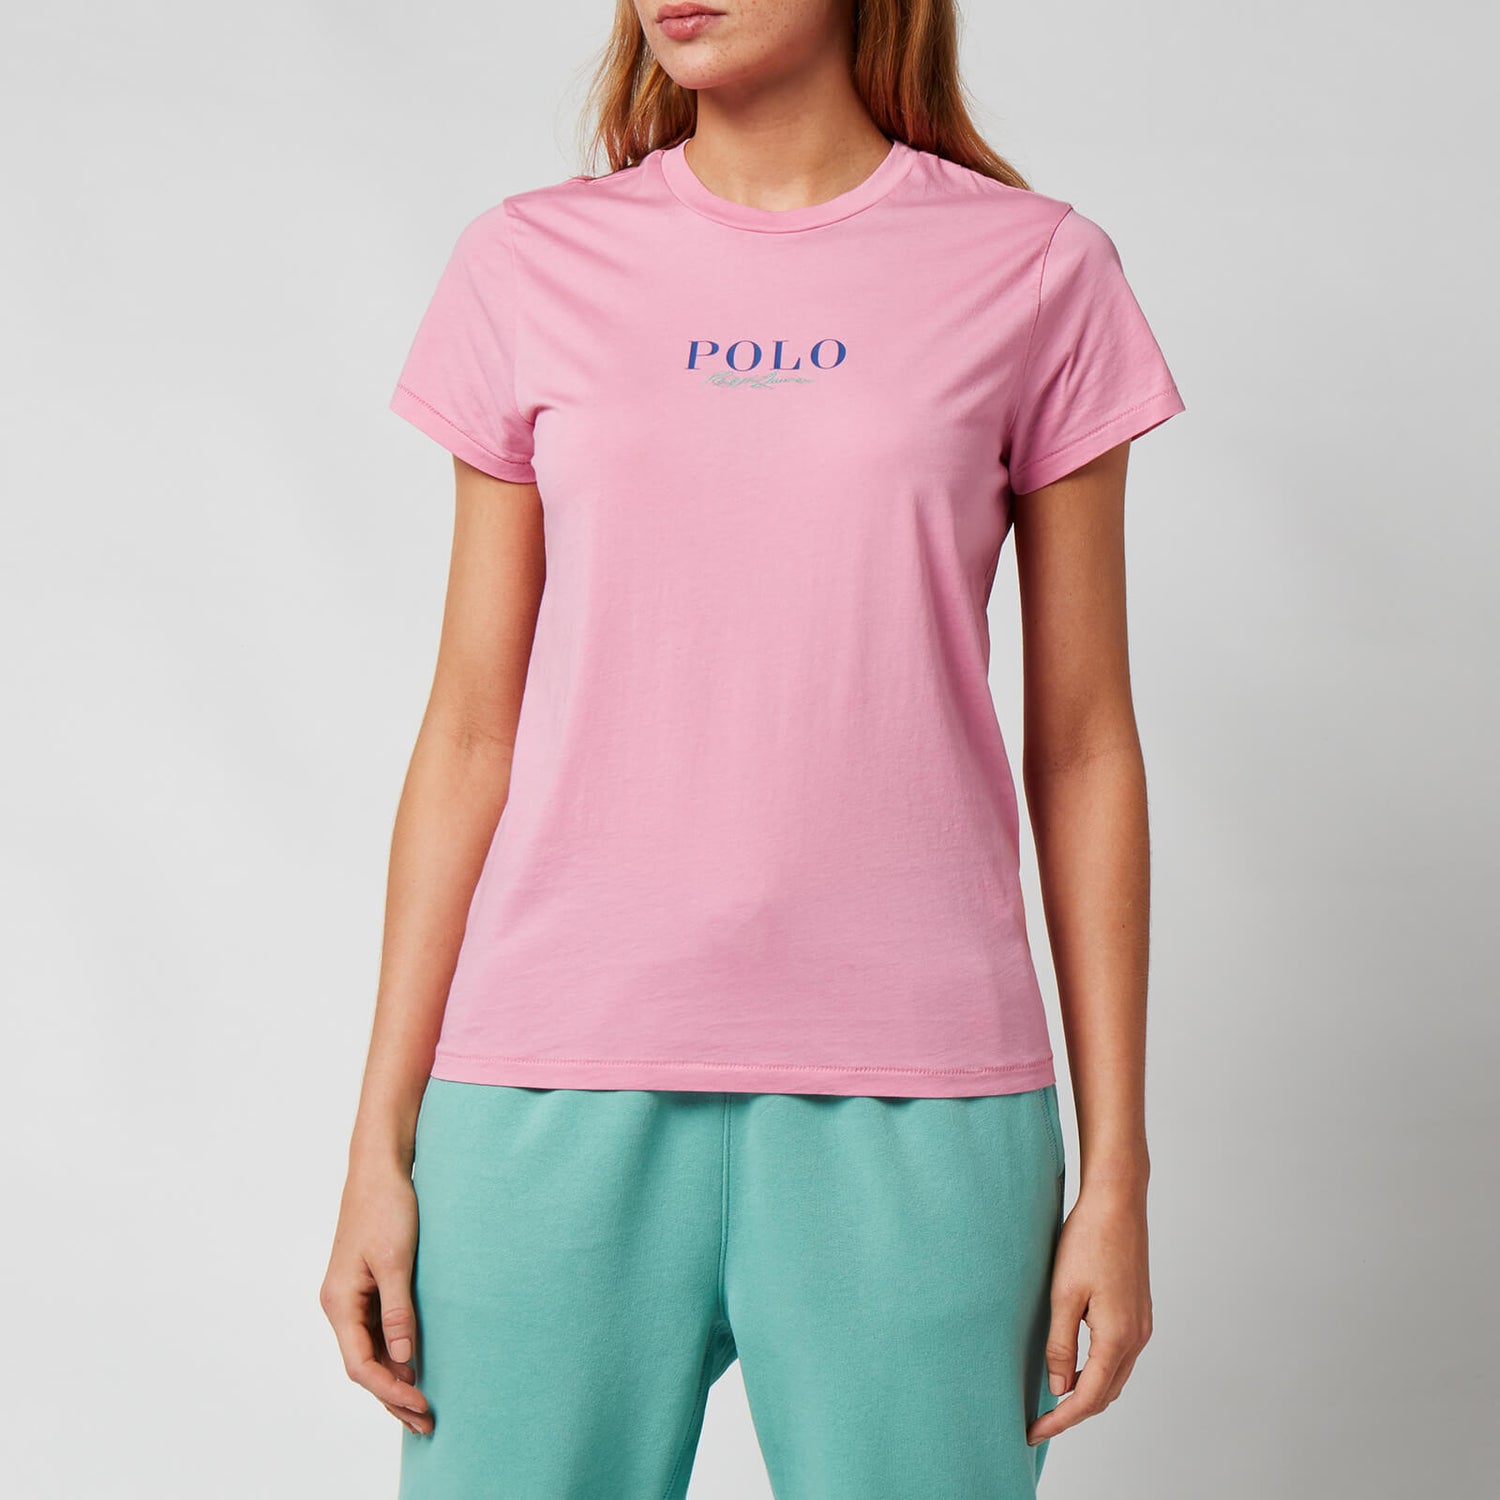 Polo Ralph Lauren Women's Polo Handwriting Logo T-Shirt - Beach Pink